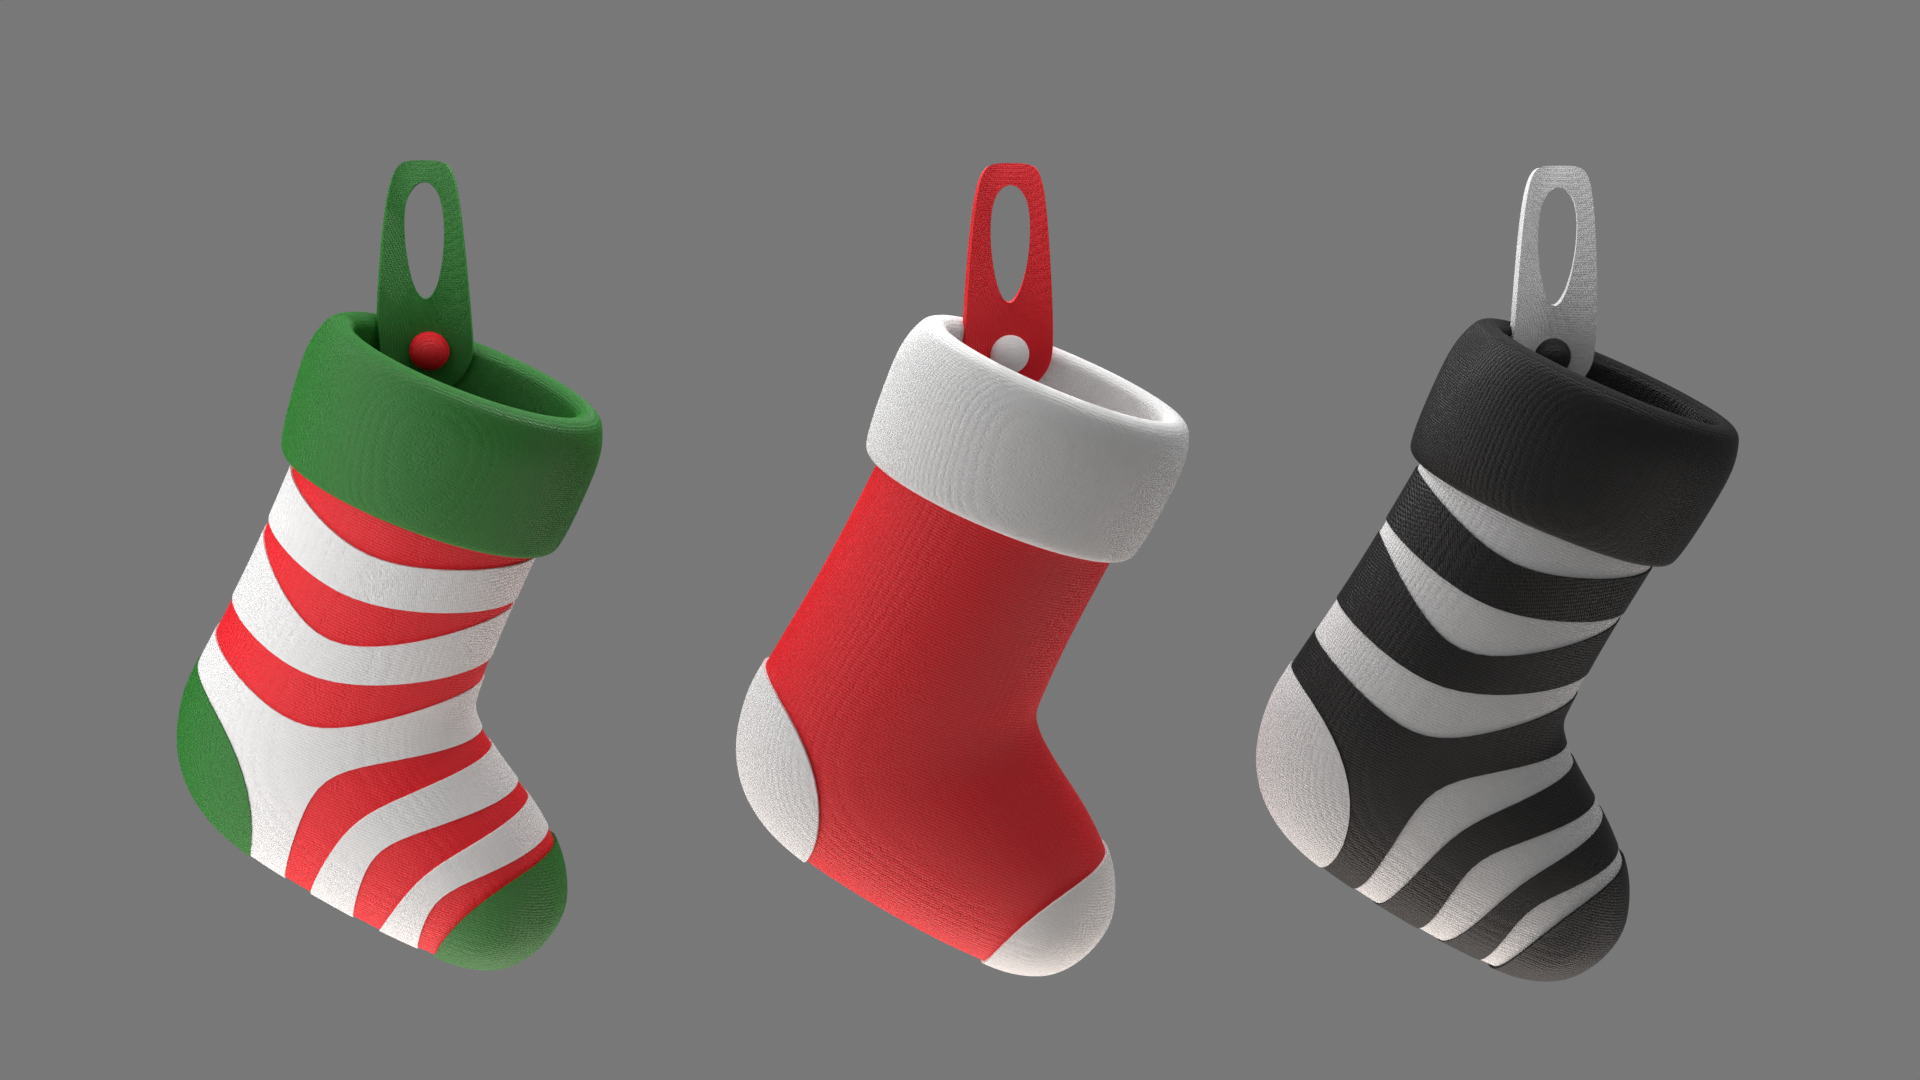 XMas Socks / Christmas Stockings preview image 1